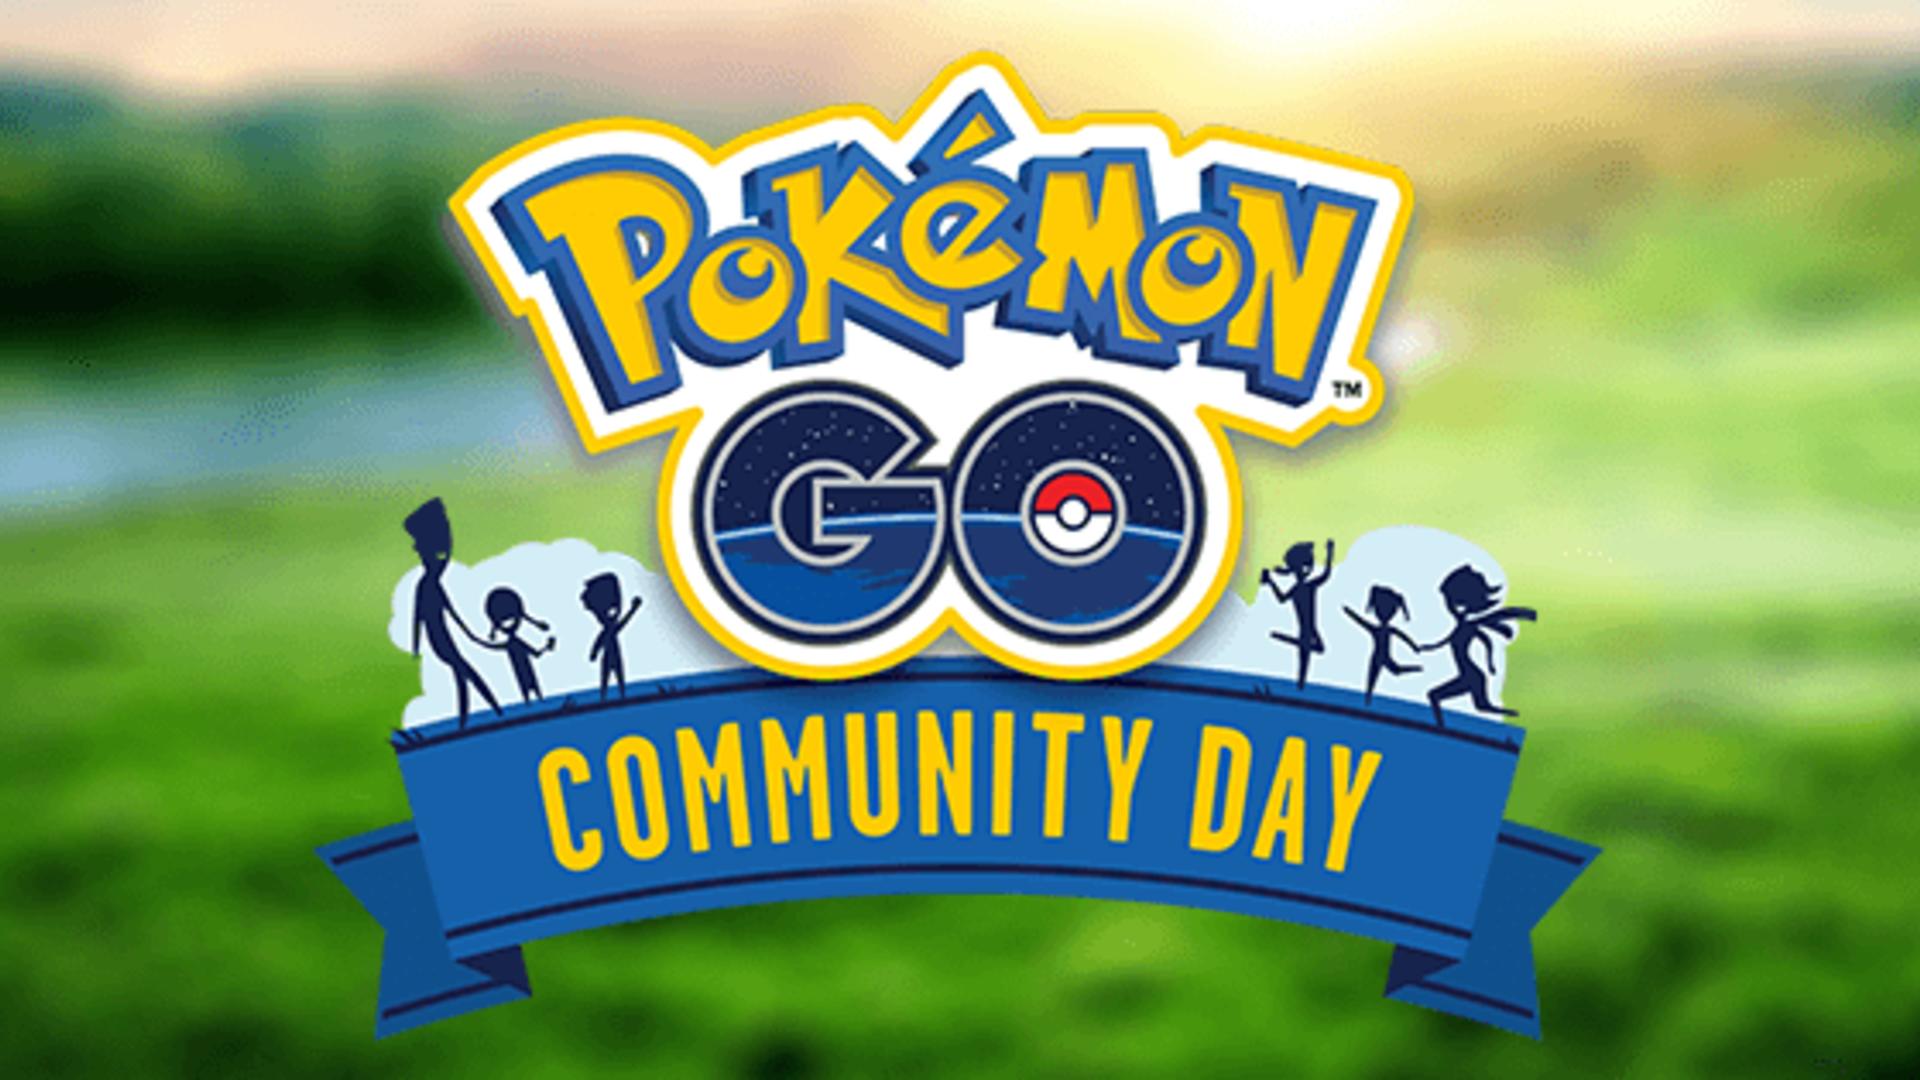 Pokemon Go Community Day September 2019